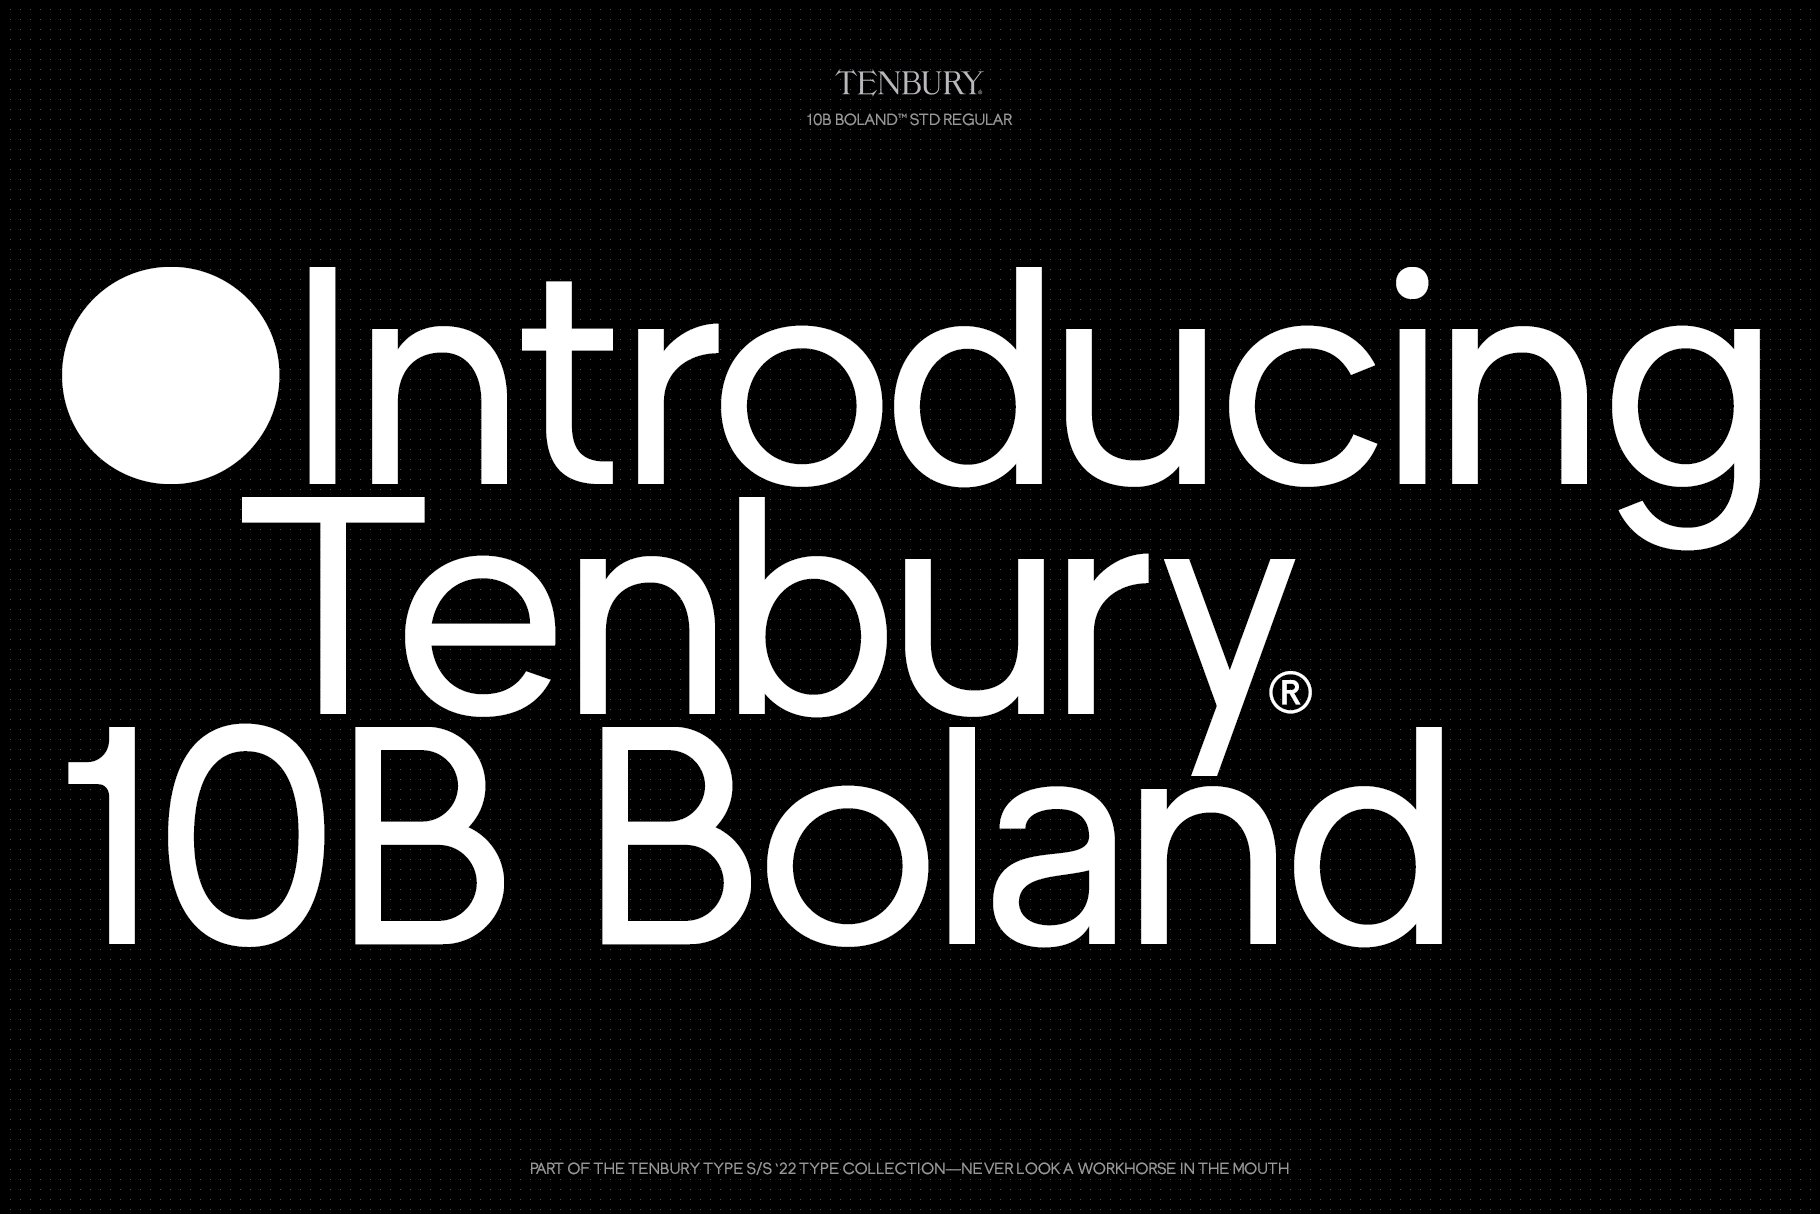 10B Boland: Timeless Geometric Sans cover image.